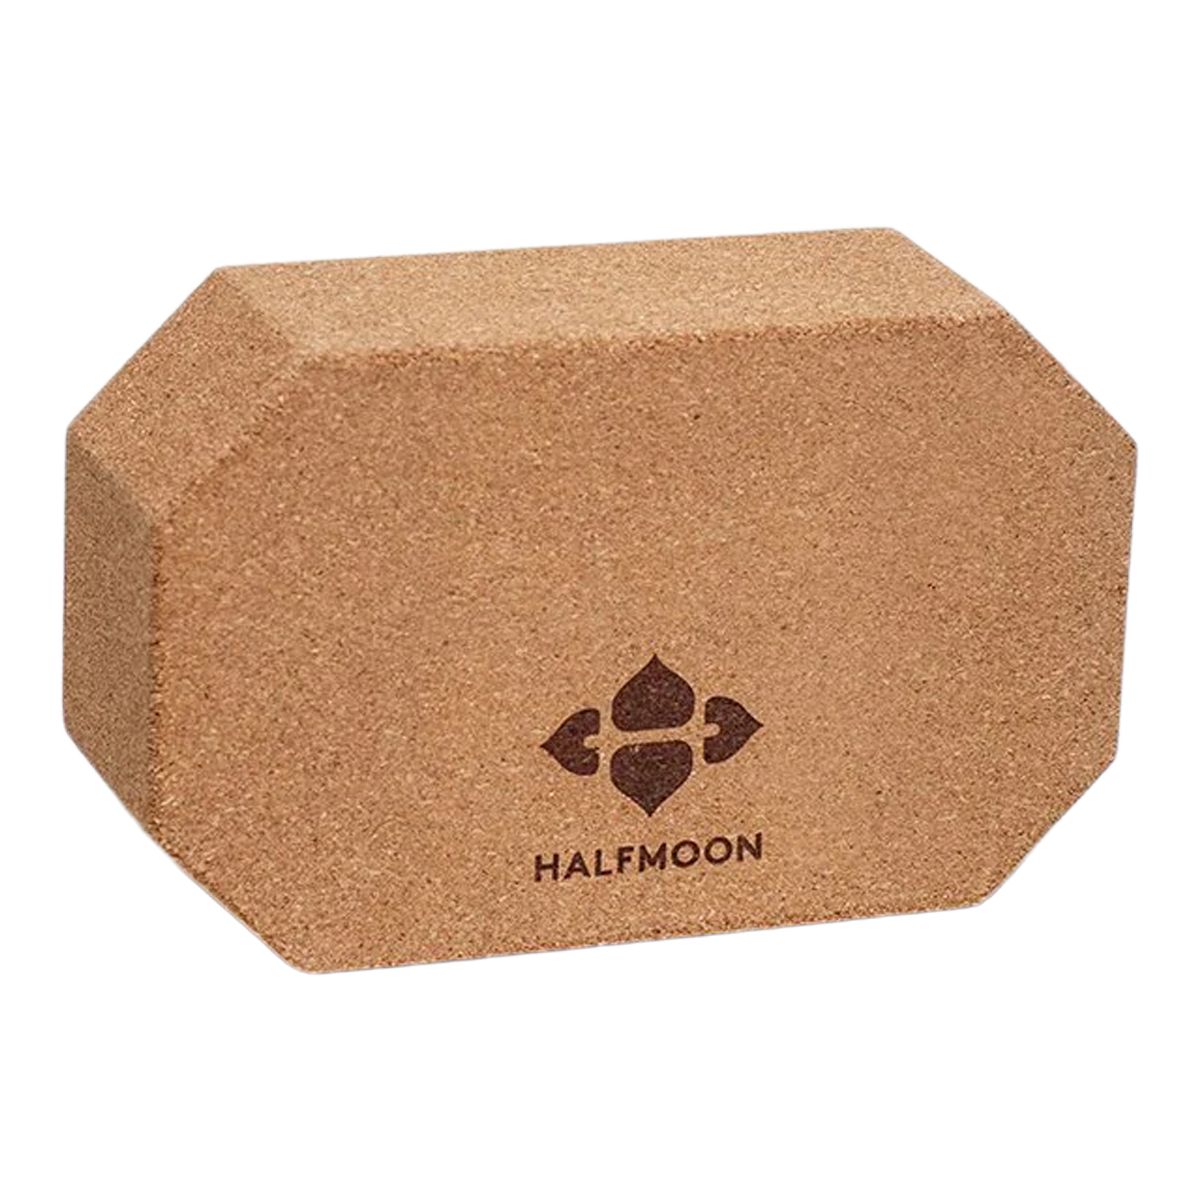 Halfmoon Octagonal Cork Yoga Block